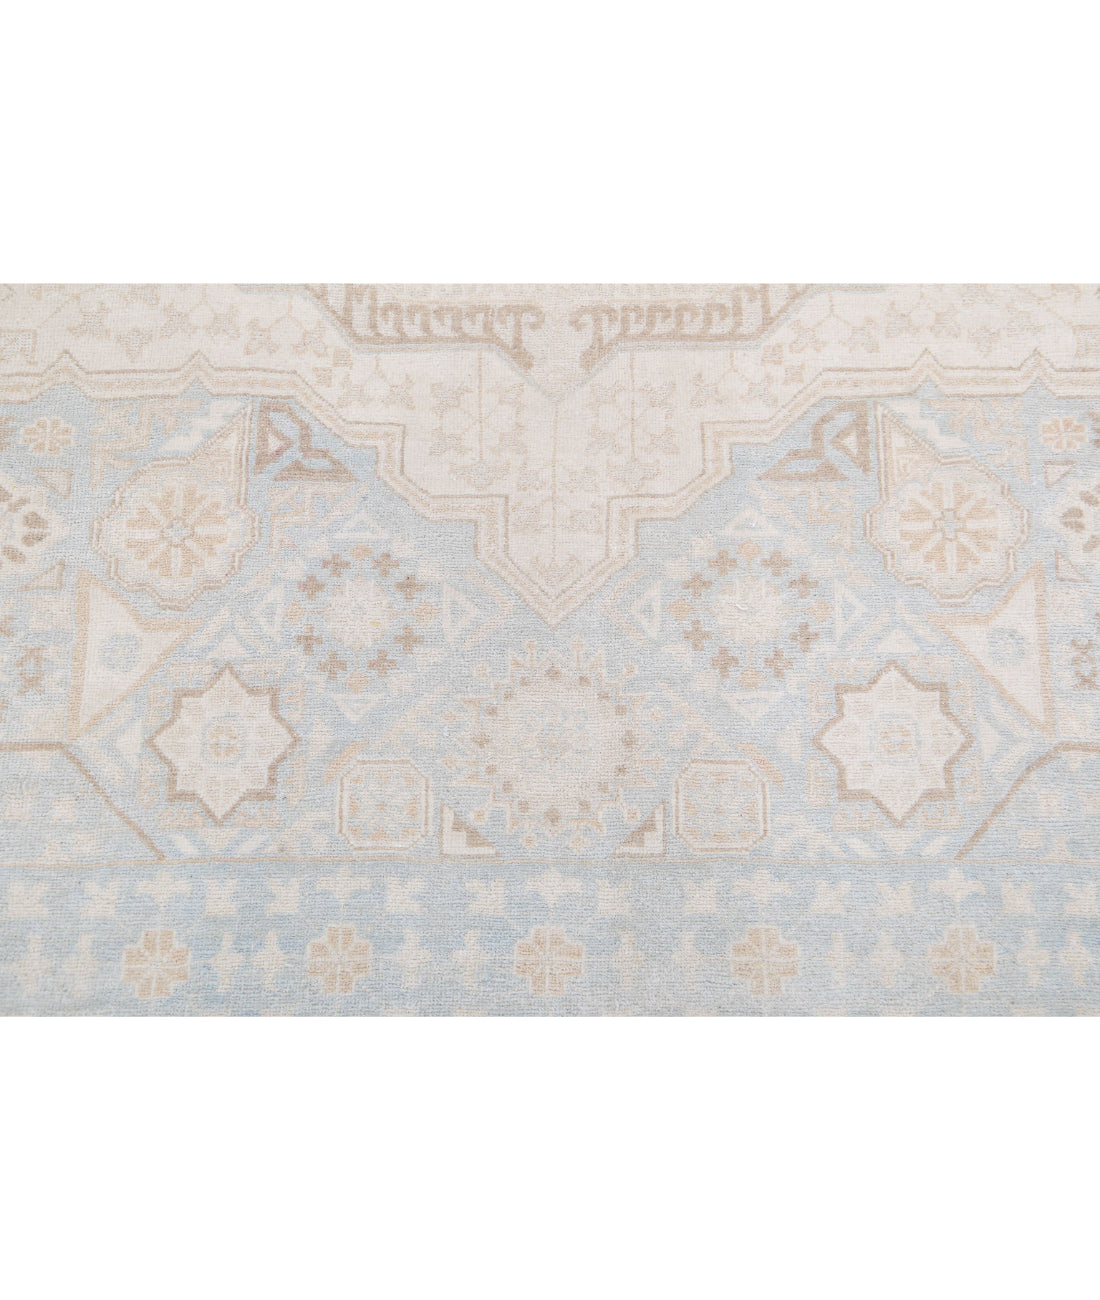 Hand Knotted Fine Mamluk Wool Rug - 6'3'' x 9'4'' 6'3'' x 9'4'' (188 X 280) / Blue / Ivory